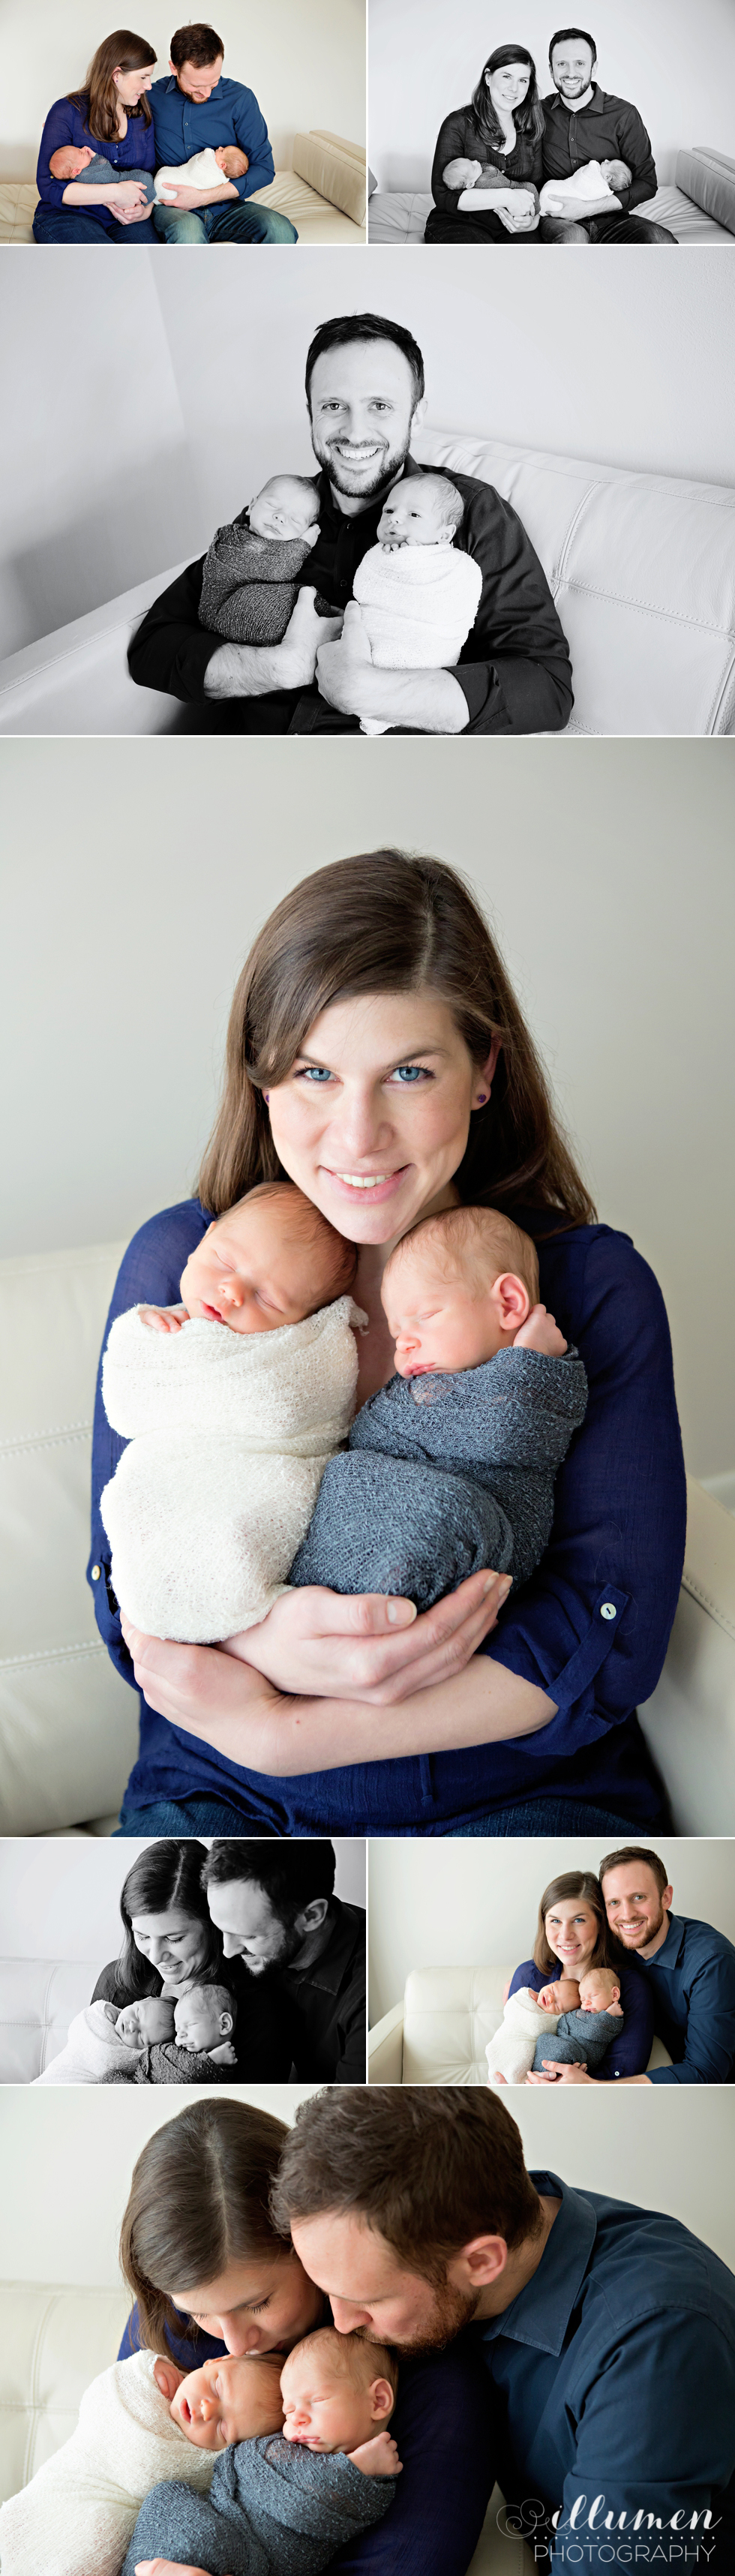 St. Louis Newborn Photography; Twin Newborns; Crestwood, Missouri, Illumen Photography; www.illumenphotography.com